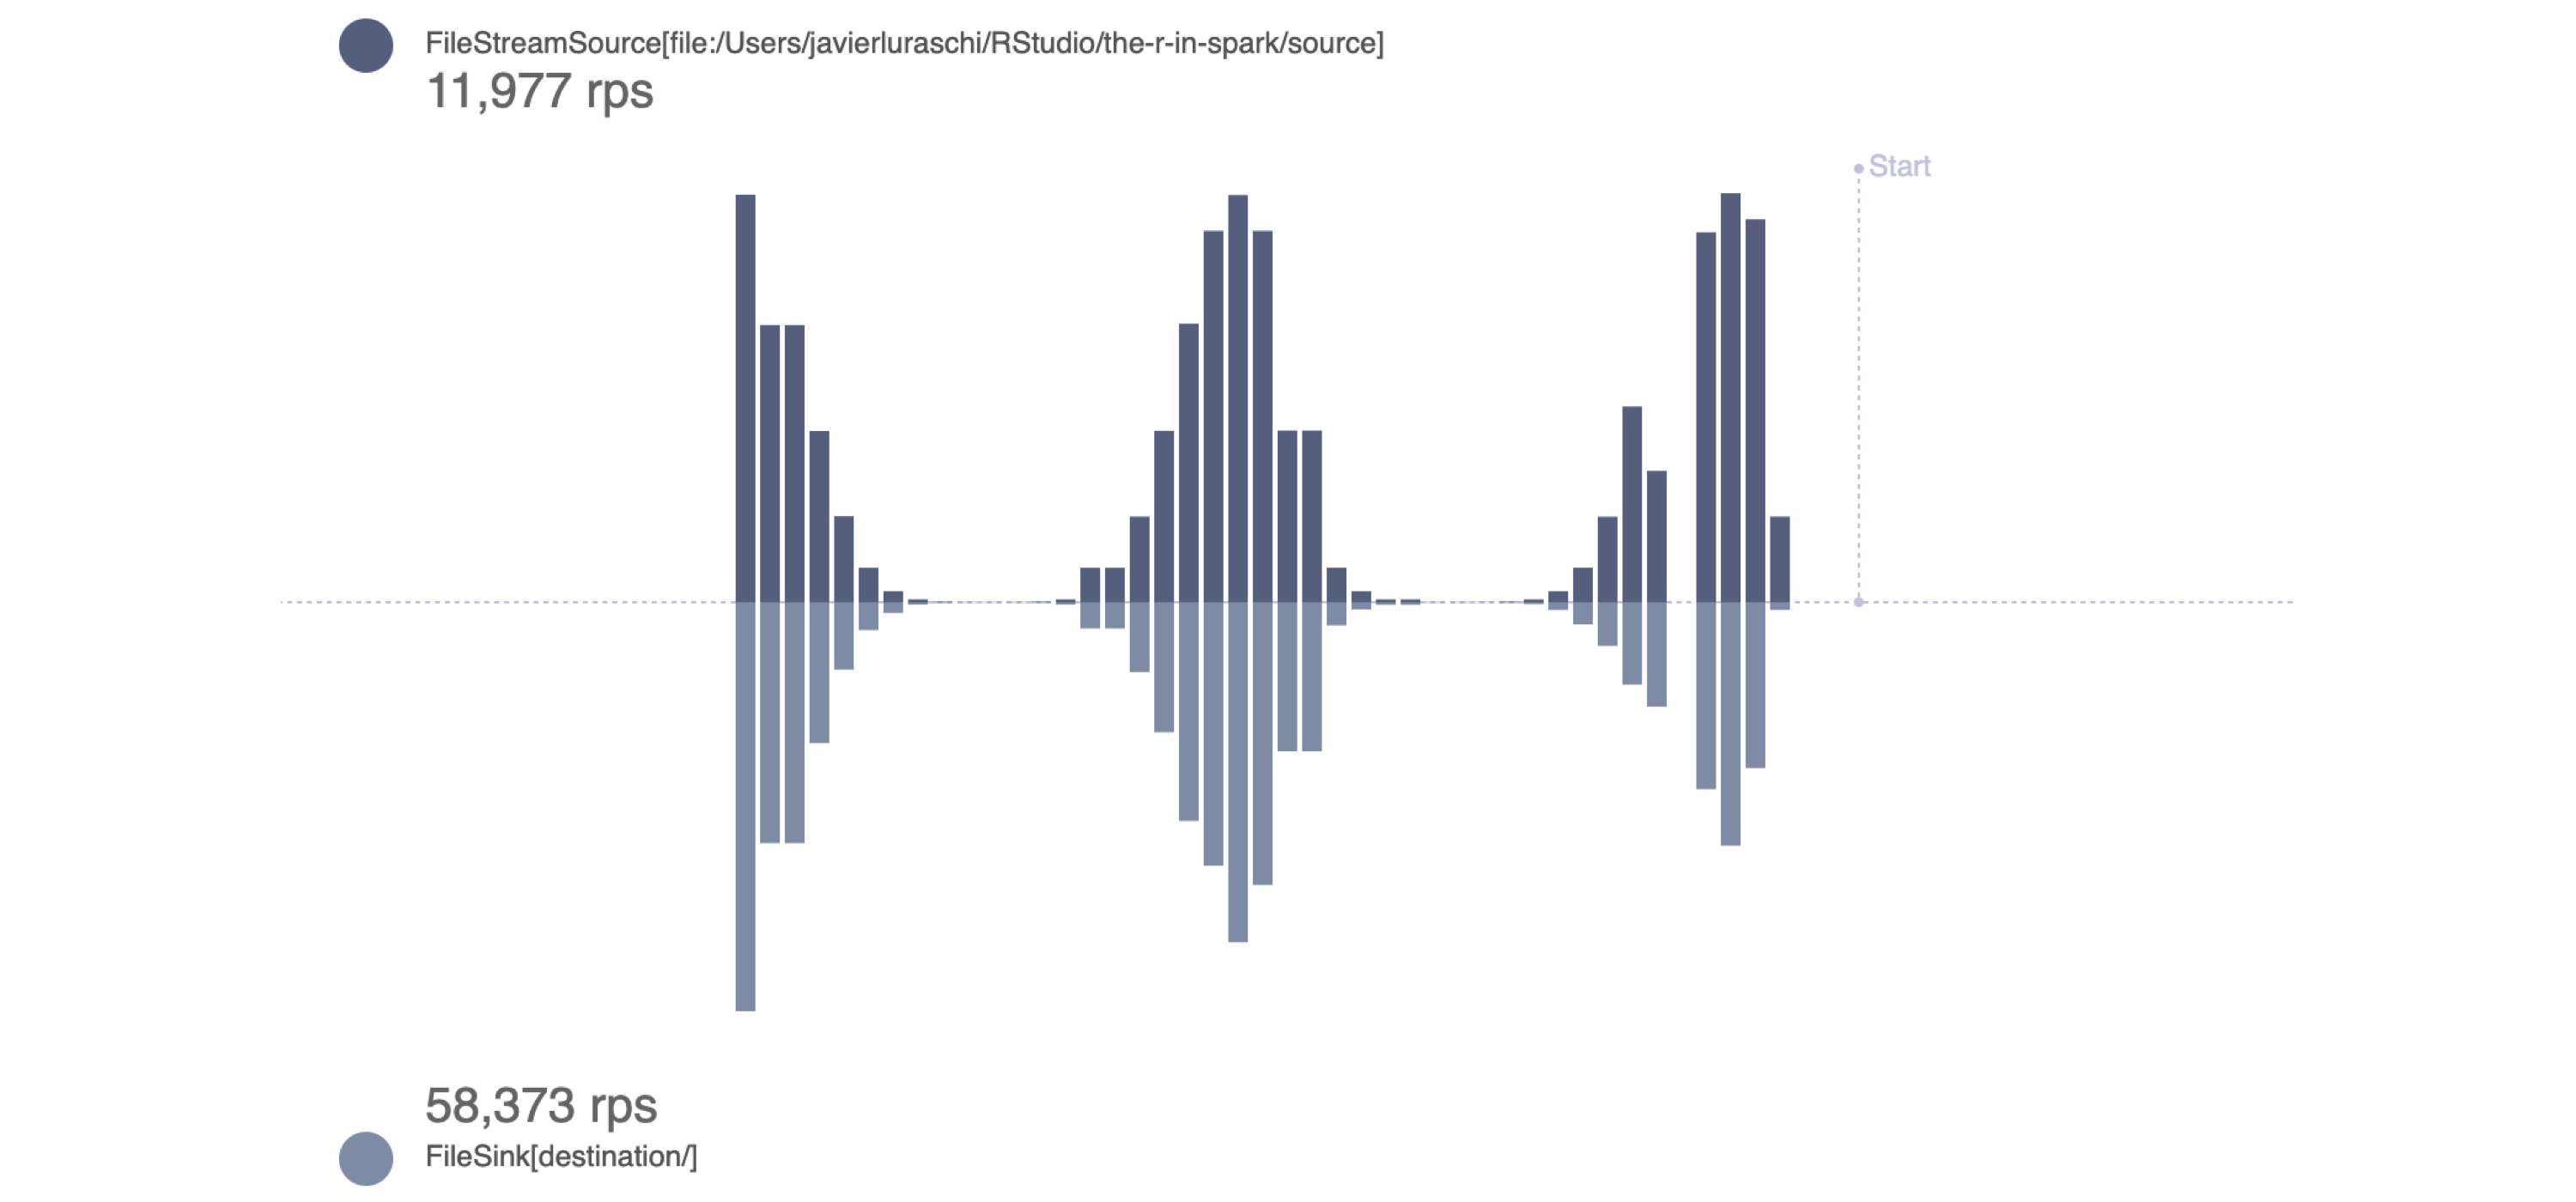 Monitoring a stream generating rows following a binomial distribution